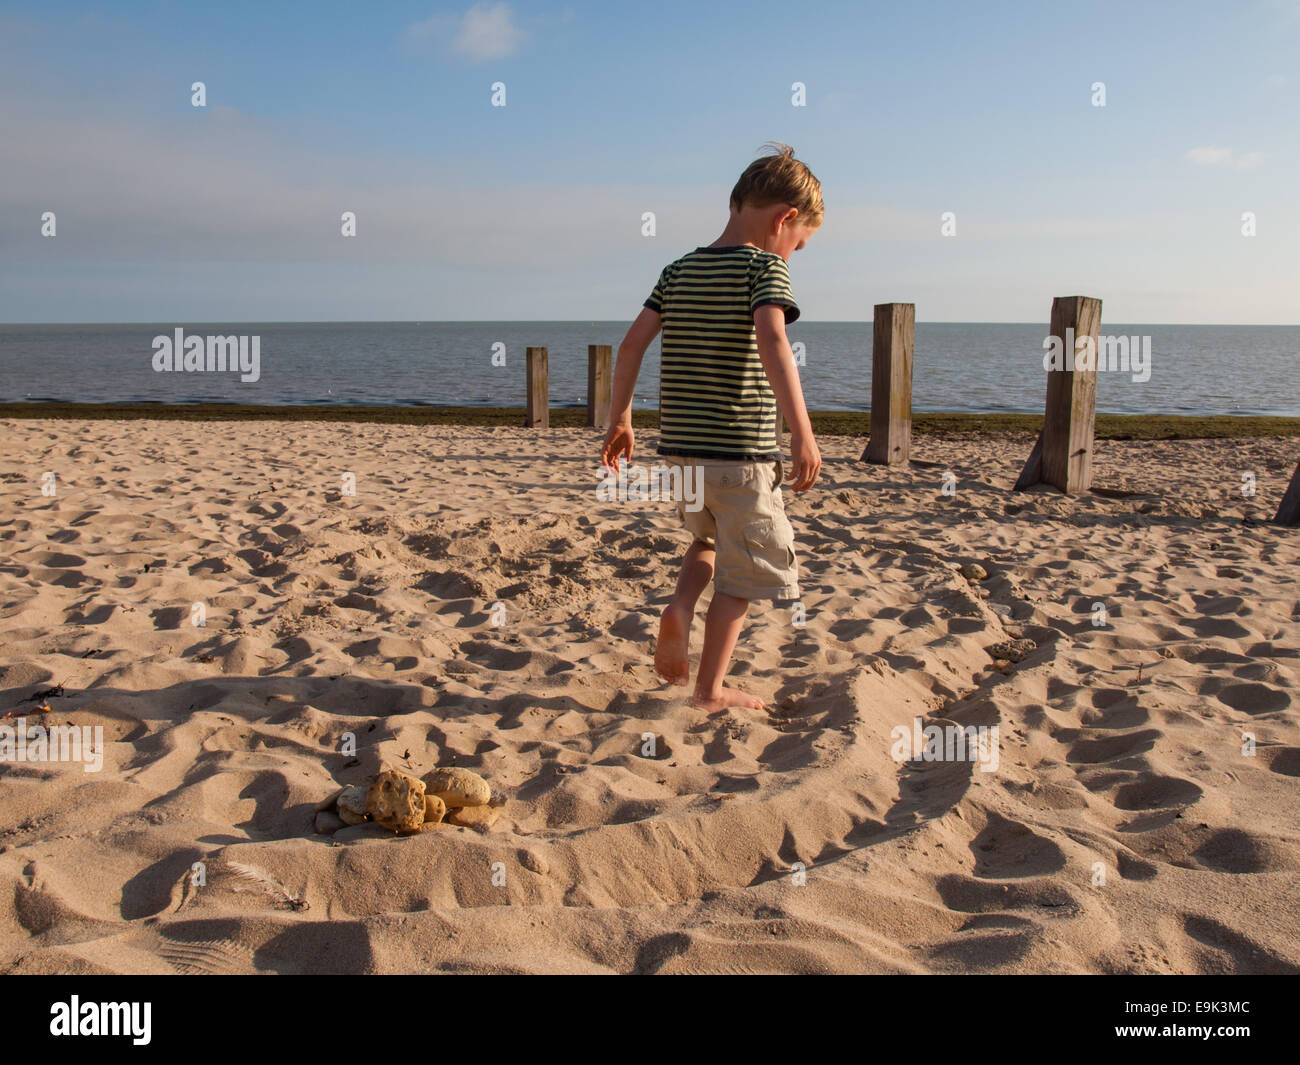 small boy playing on a sandy beach Stock Photo